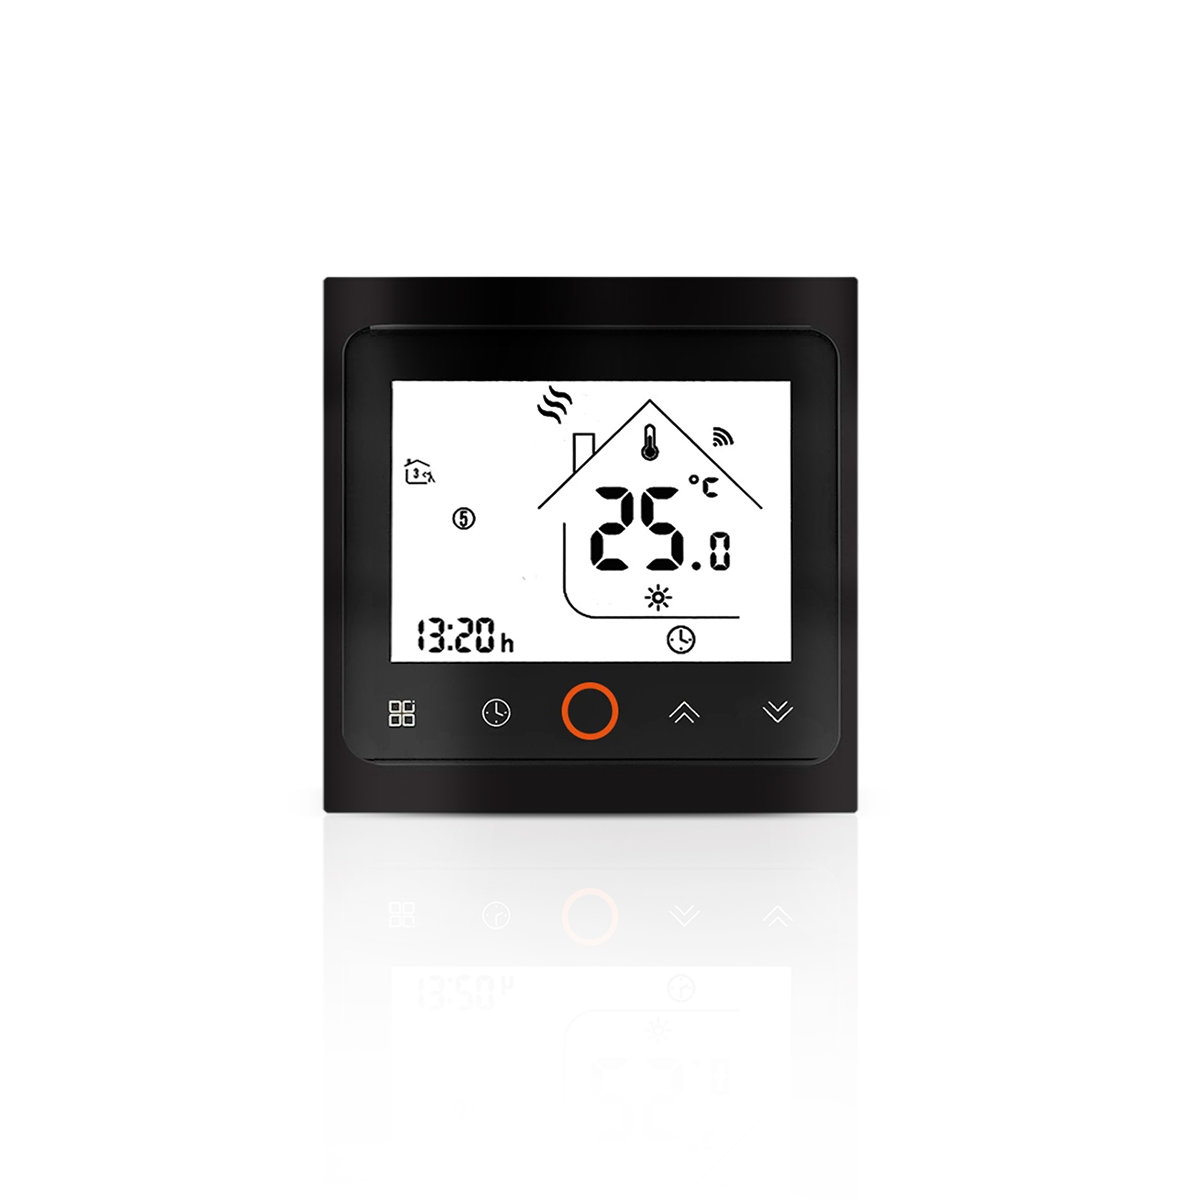 BHT-002 Series Smart Heating Thermostat